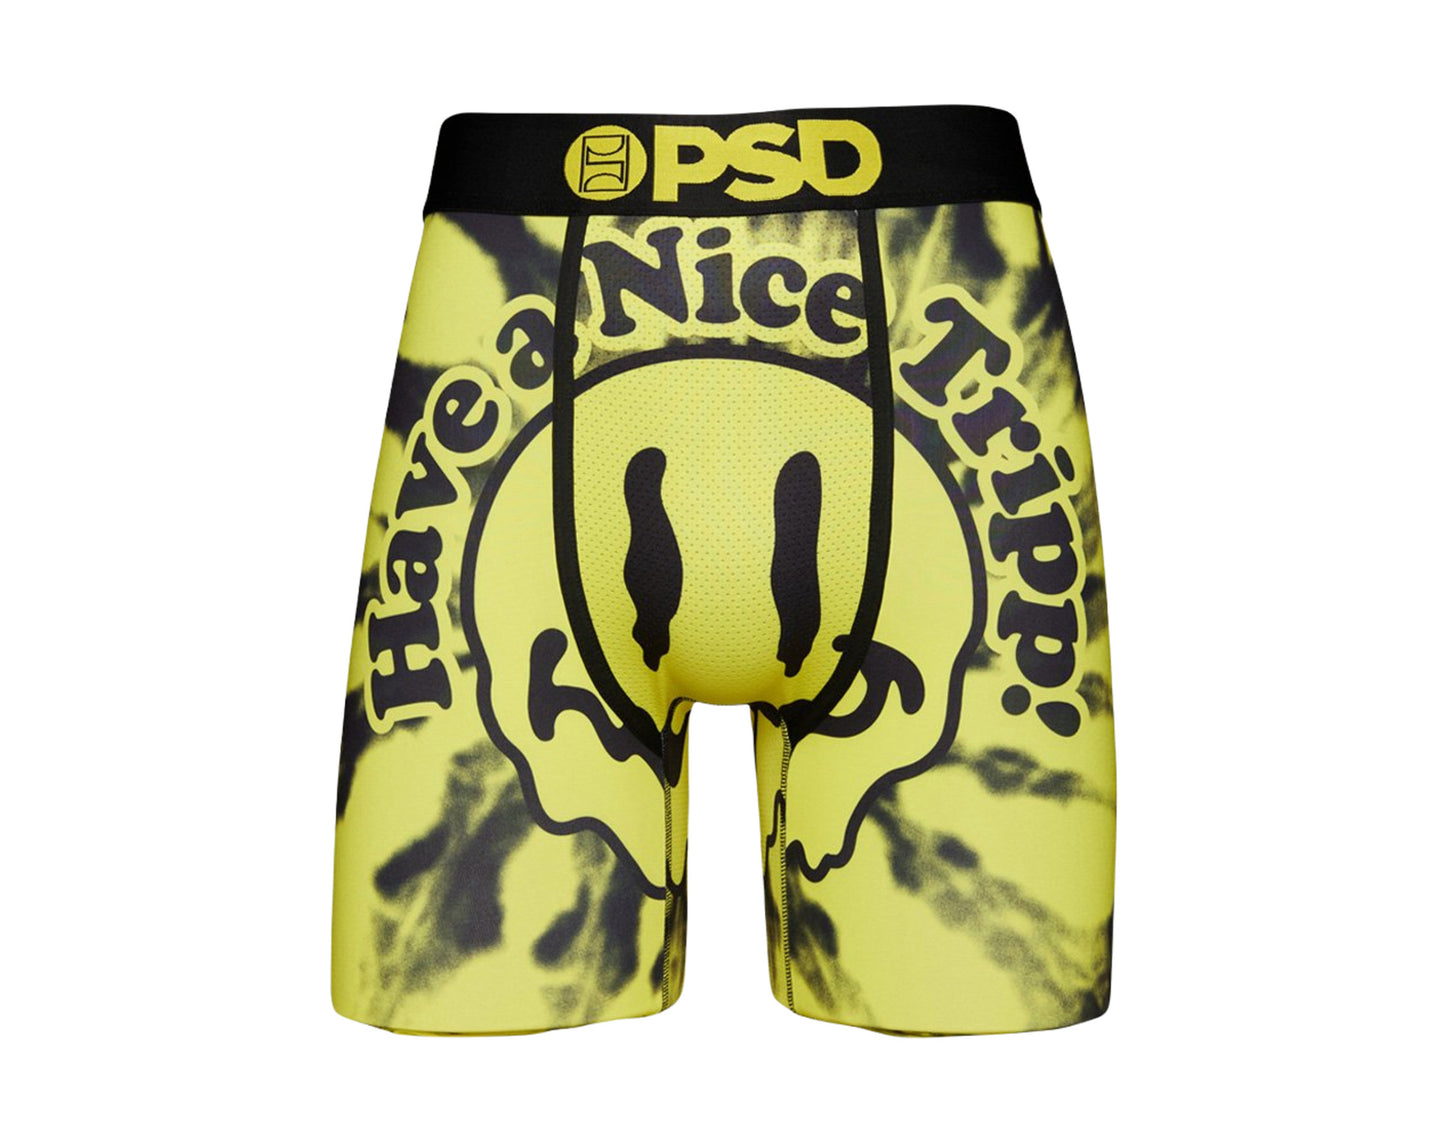 PSD Acid Smile Boxer Briefs Men's Underwear